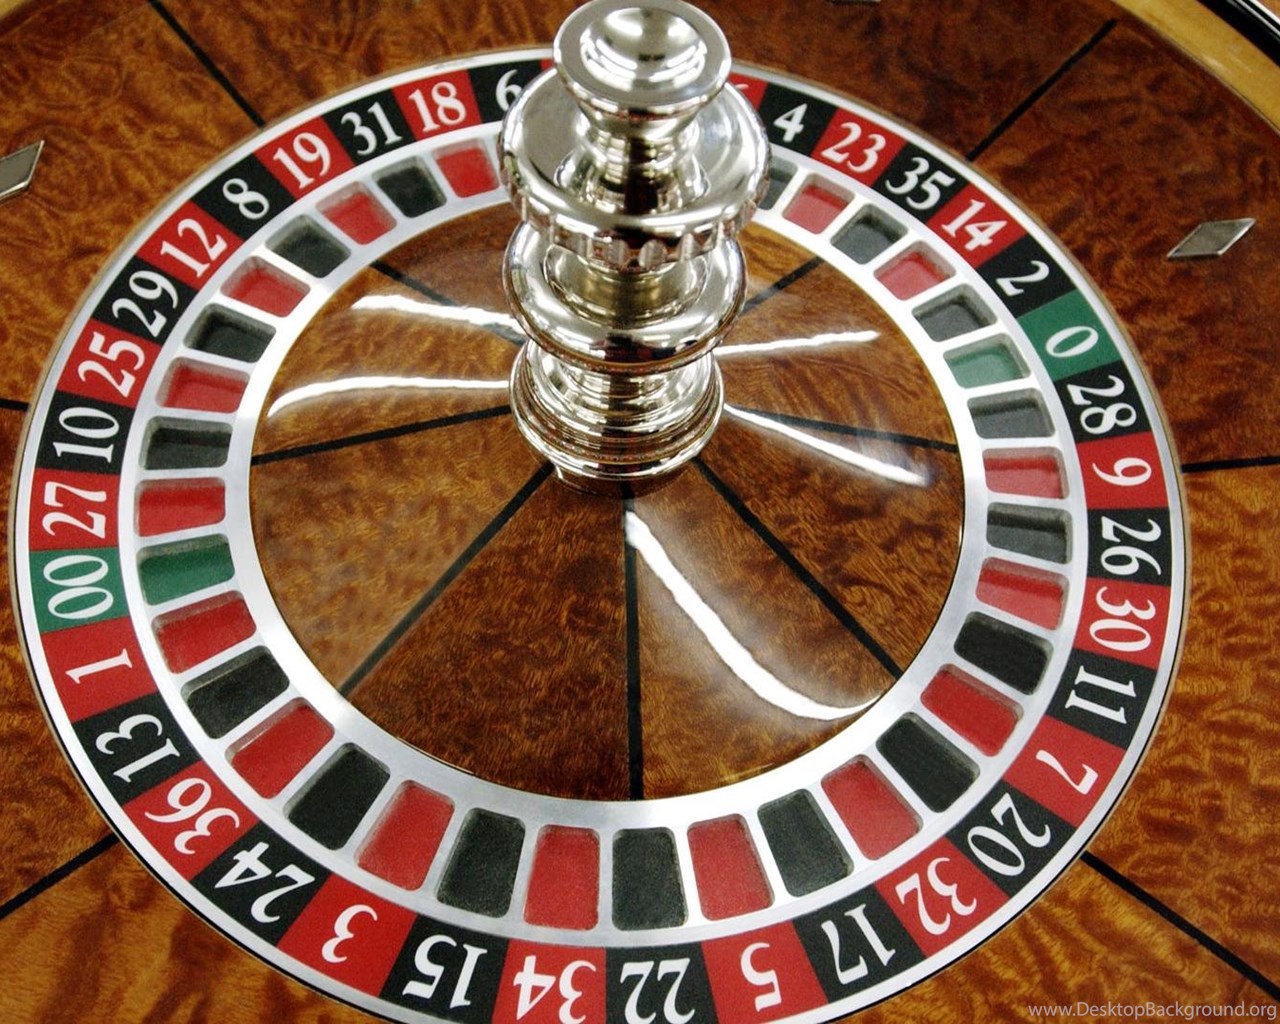 Maximizing your profits in online casinos